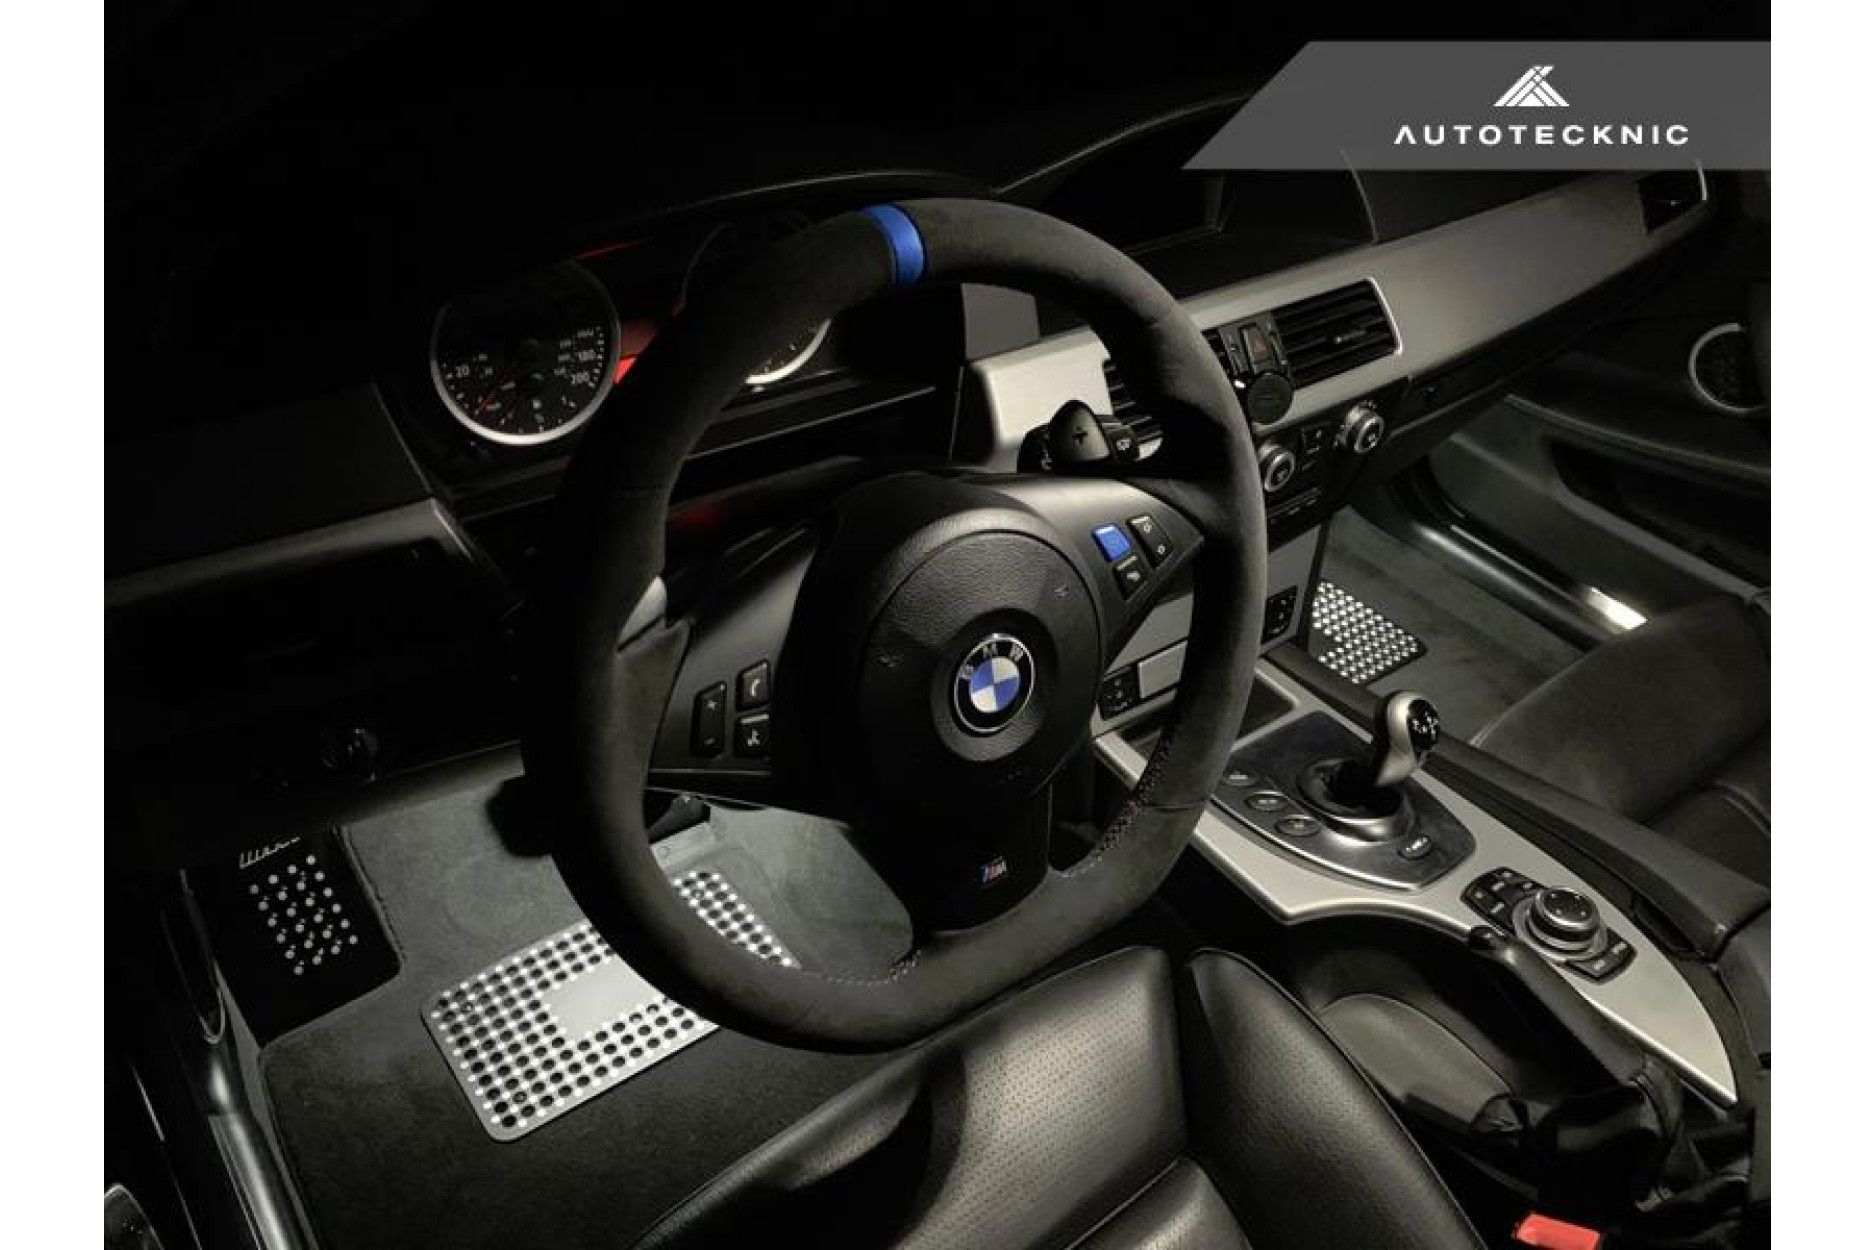 Autotecknic M-Knopf für BMW E60|E63|E64 M5|M6 - online kaufen bei CFD